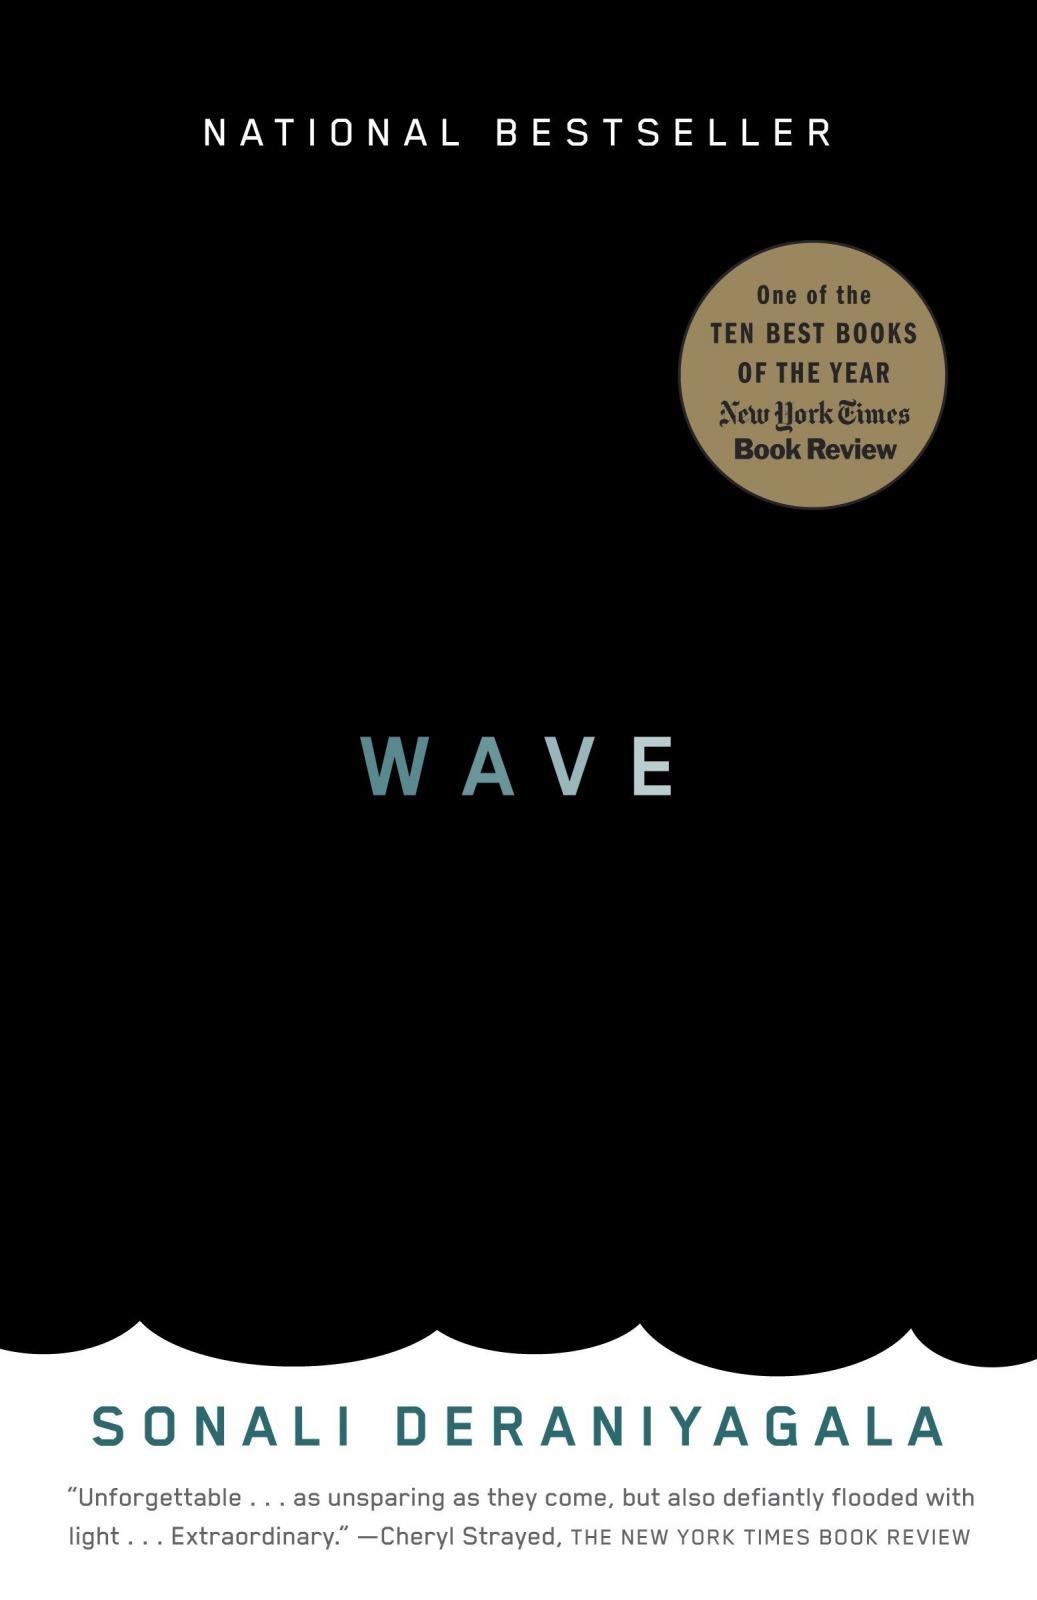 Cover of the book Wave, by Sonali Deraniyagala